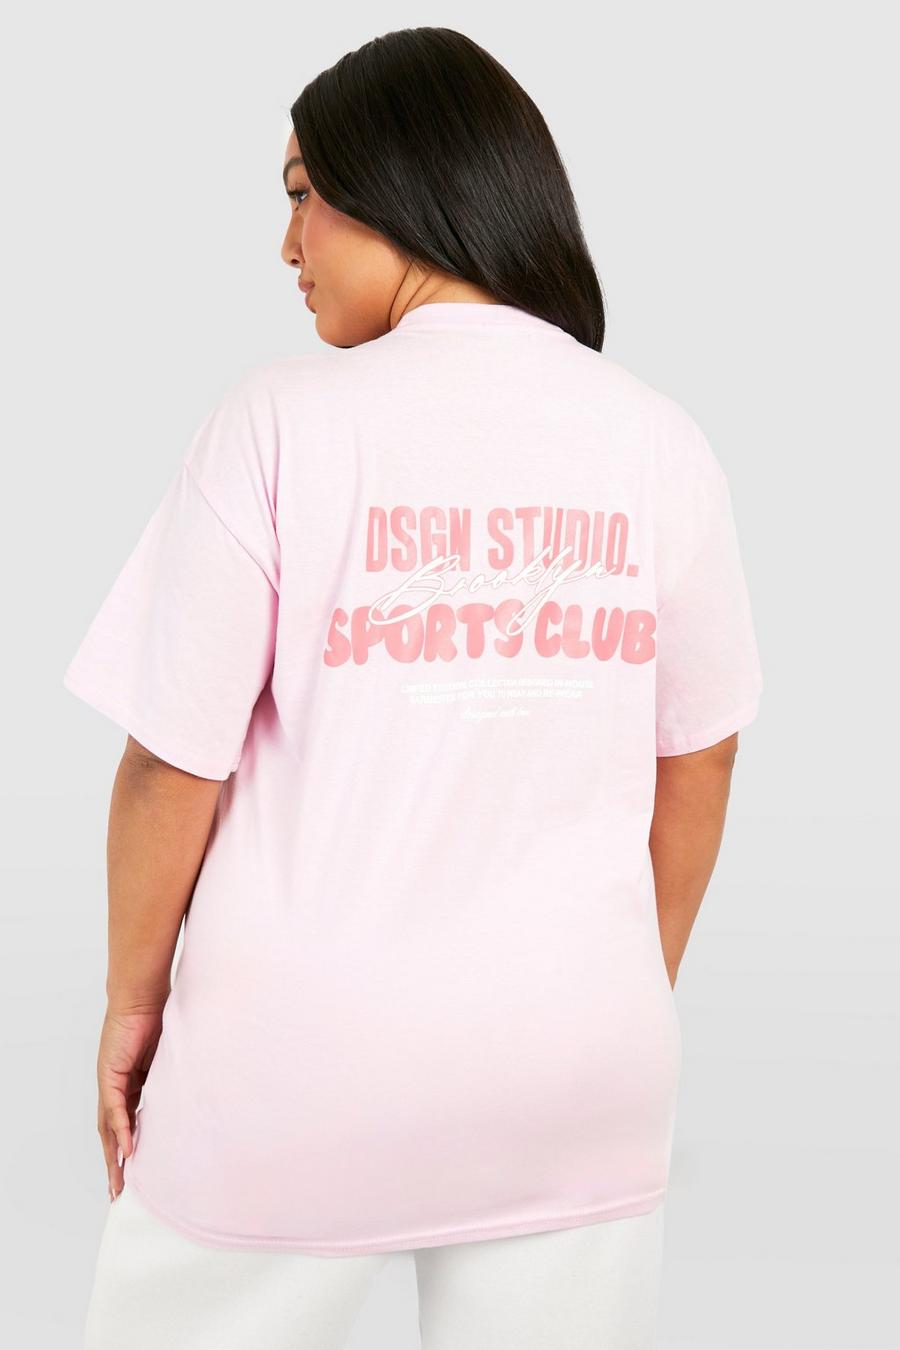 T-shirt Plus Size con scritta Dsgn Studio Brooklyn, Baby pink